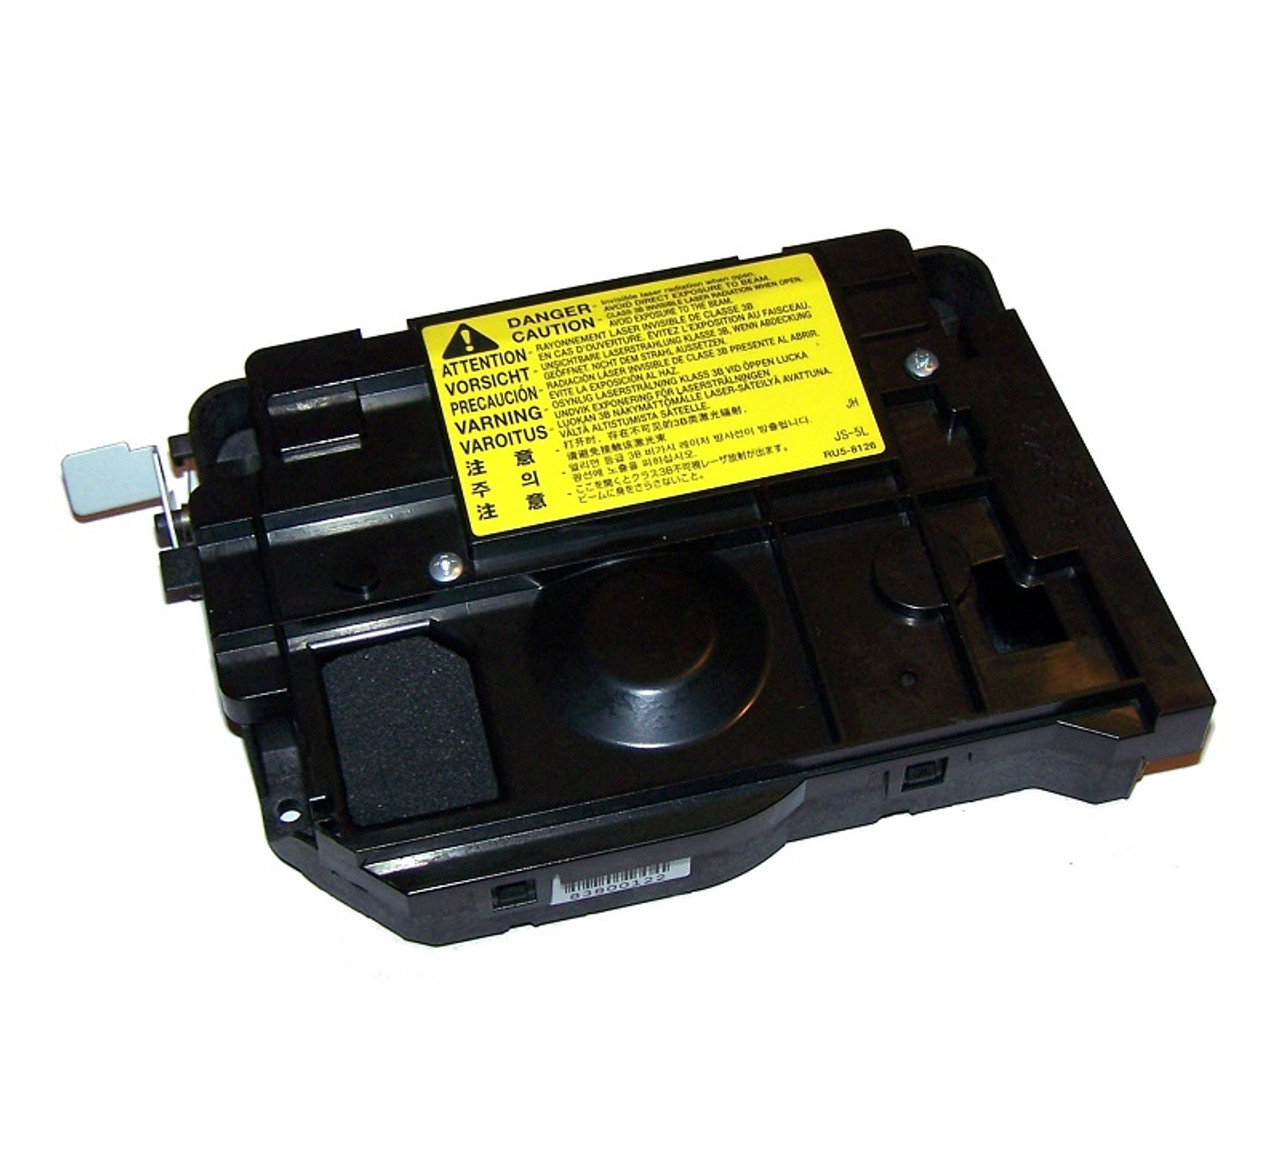 RM1-6382-000 - HP Laser Scanner for LaserJet P2035 / P2055 Series